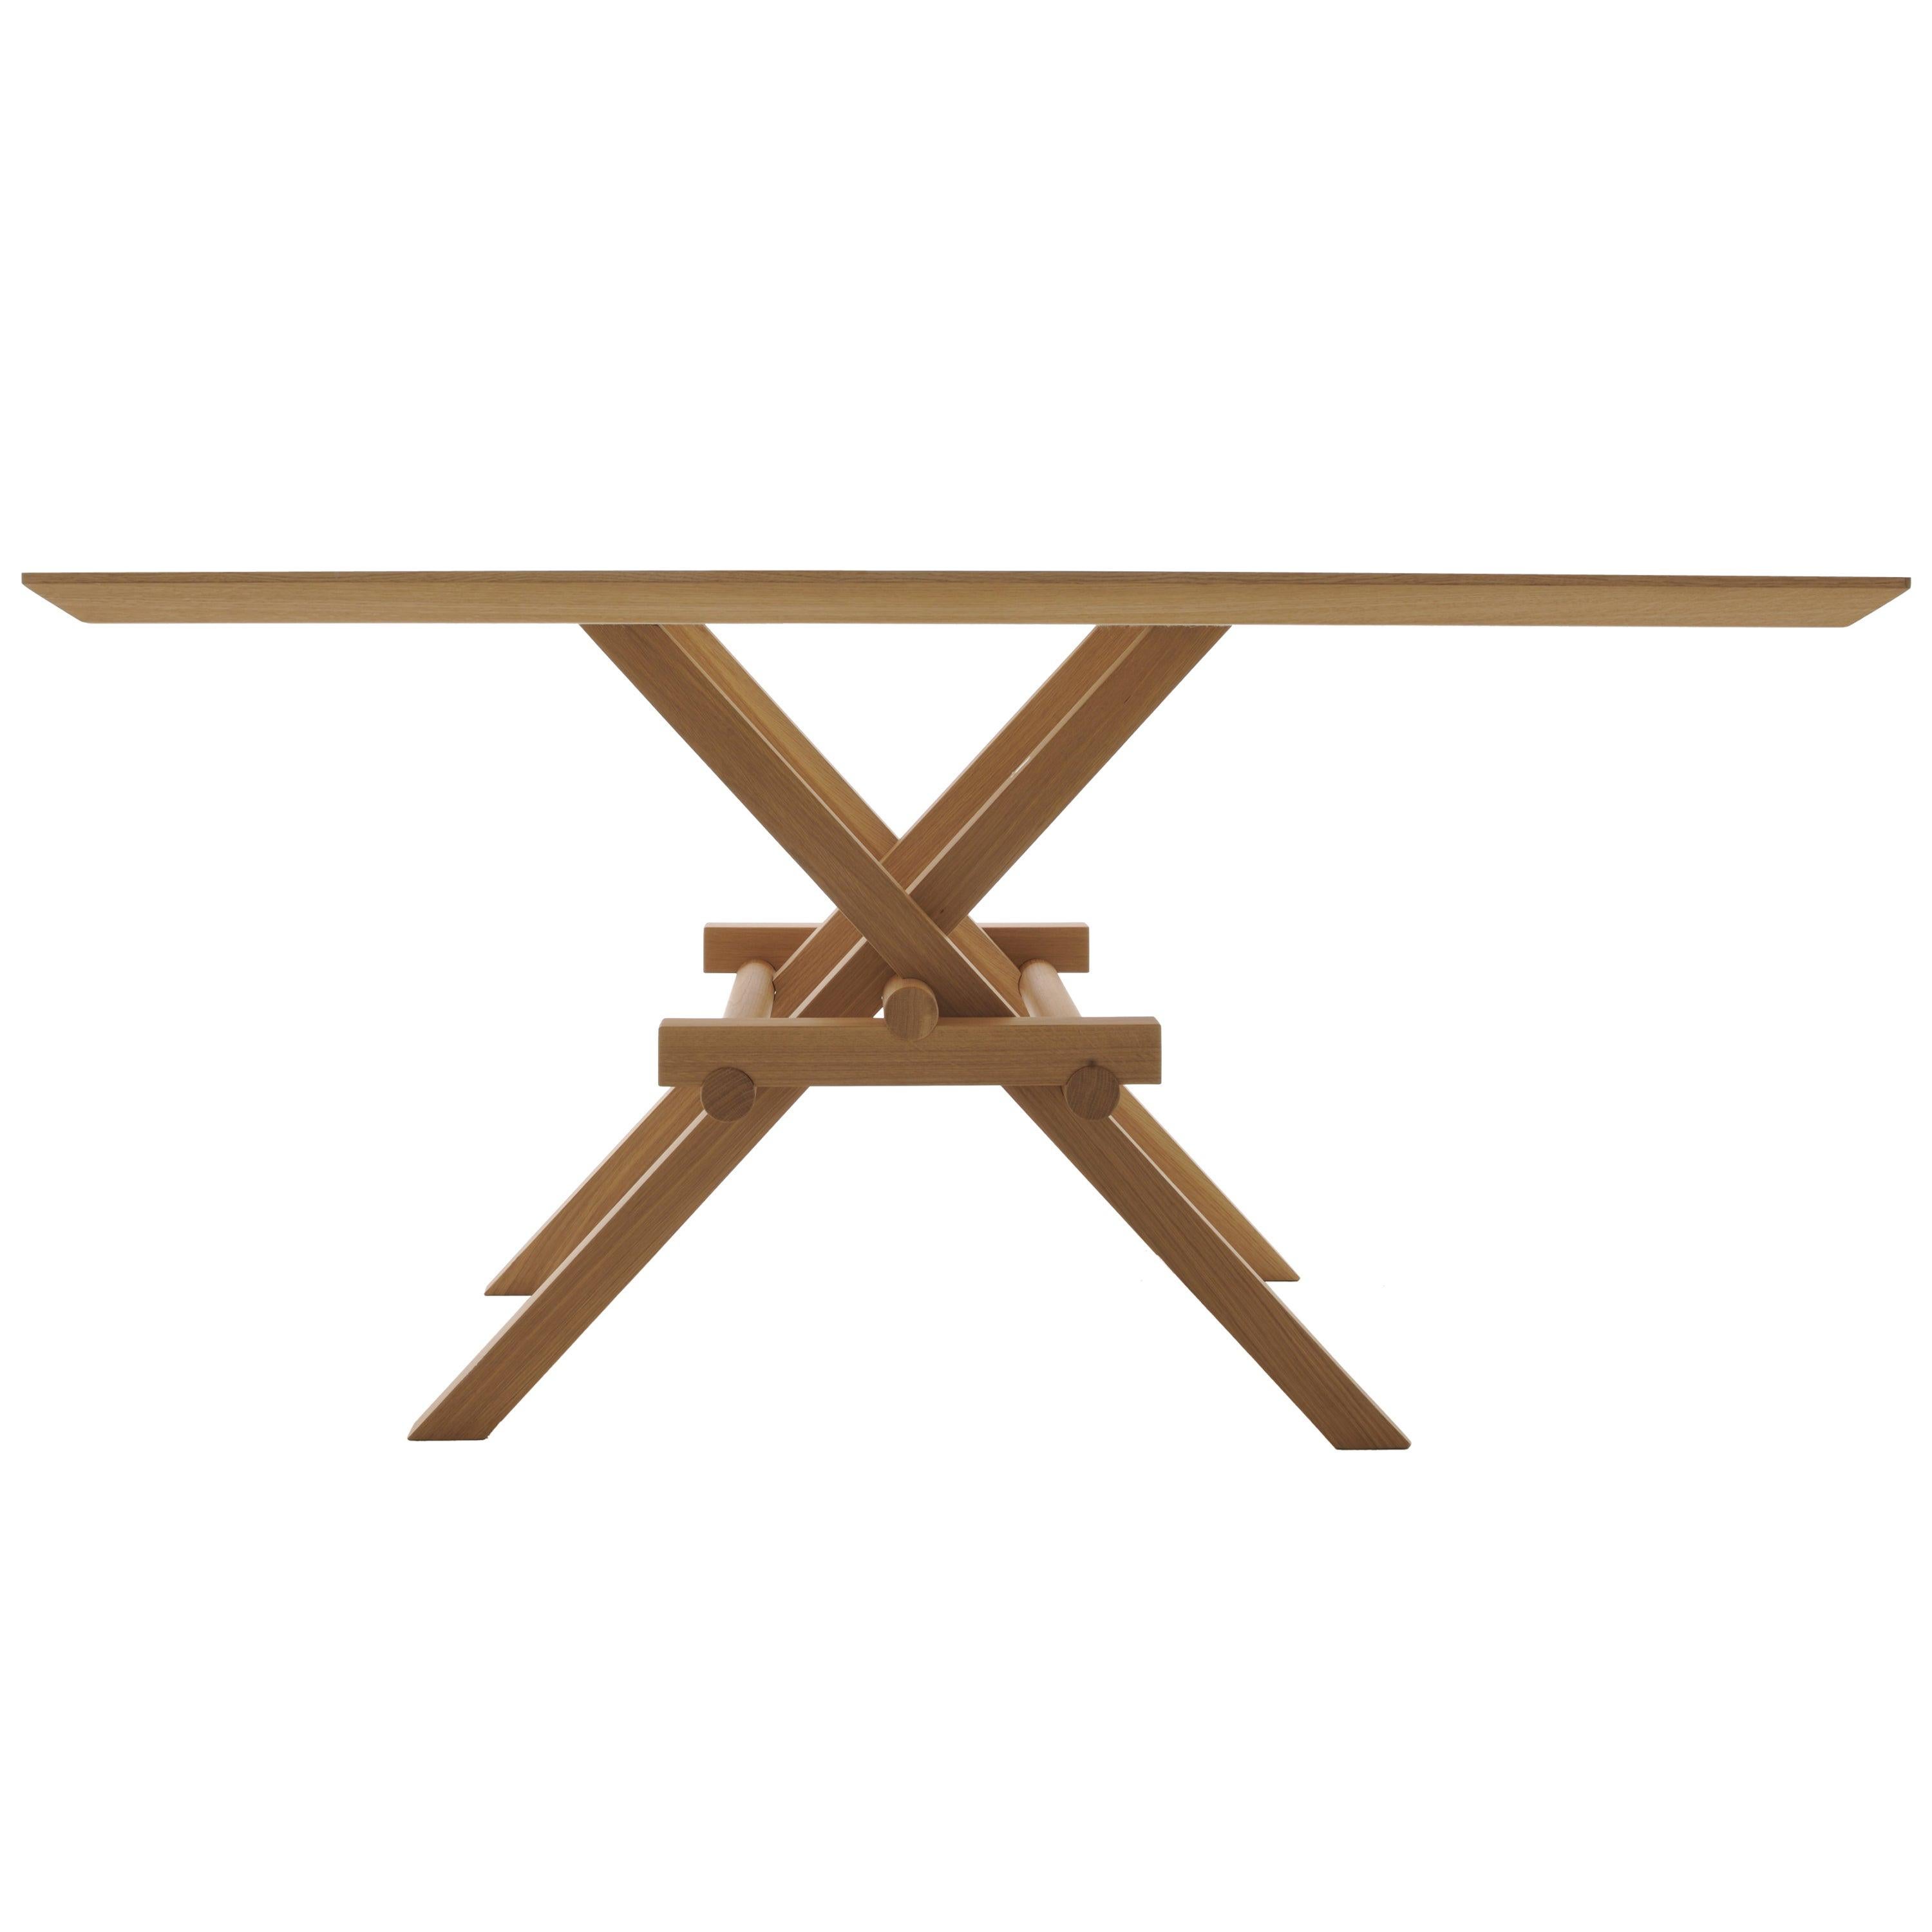 Leonardo Contemporary Table Made of Ashwood with Interlocking Legs